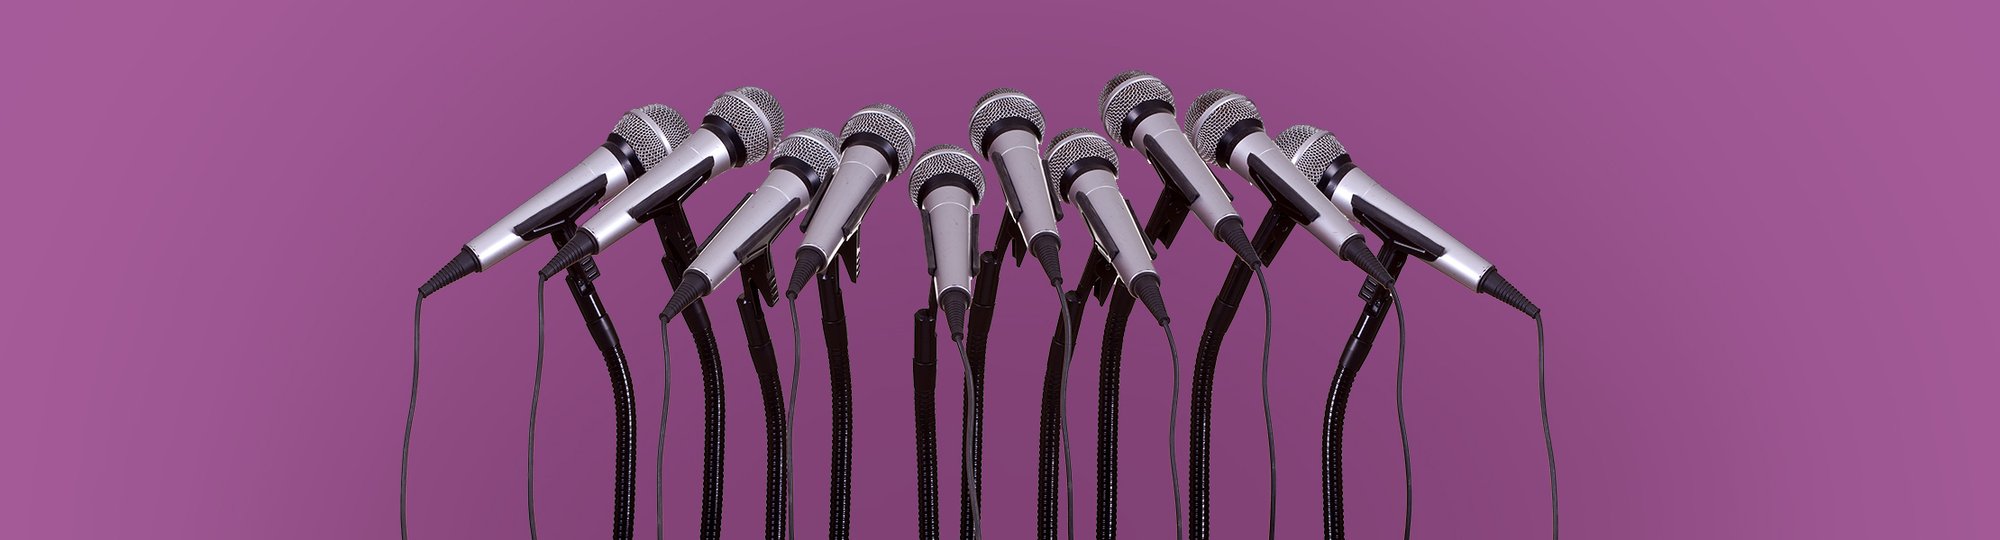 microphones-purple